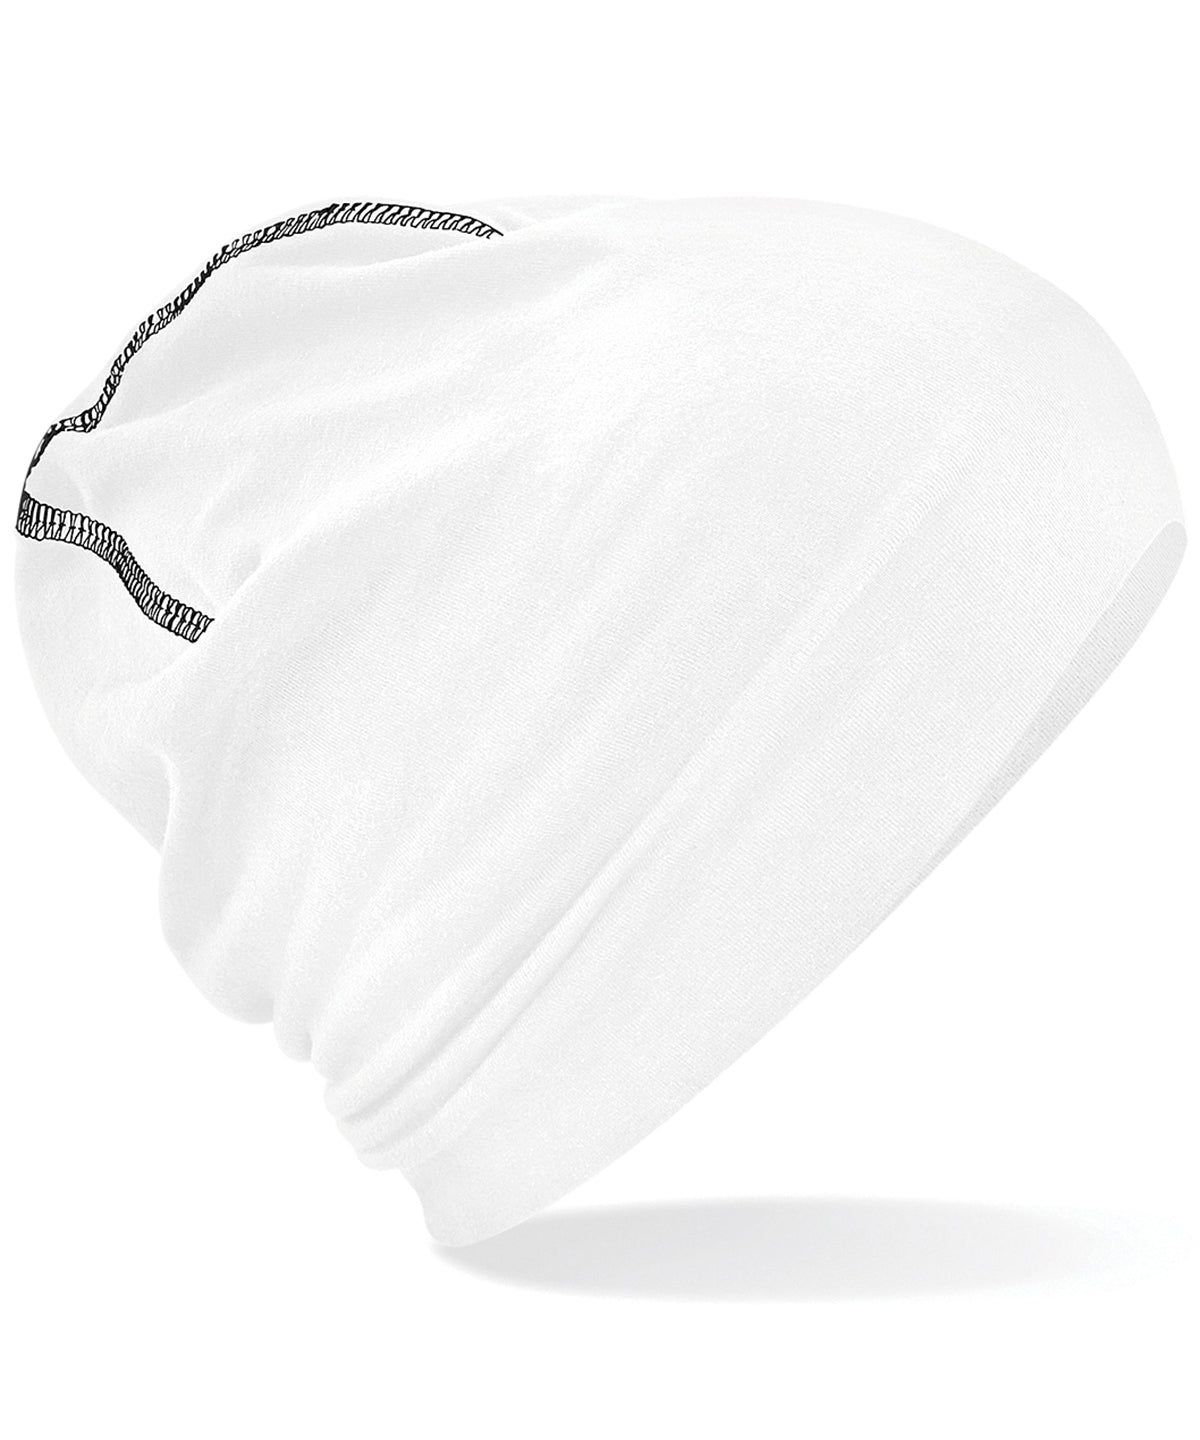 Personalised Hats - White Beechfield Hemsedal cotton beanie